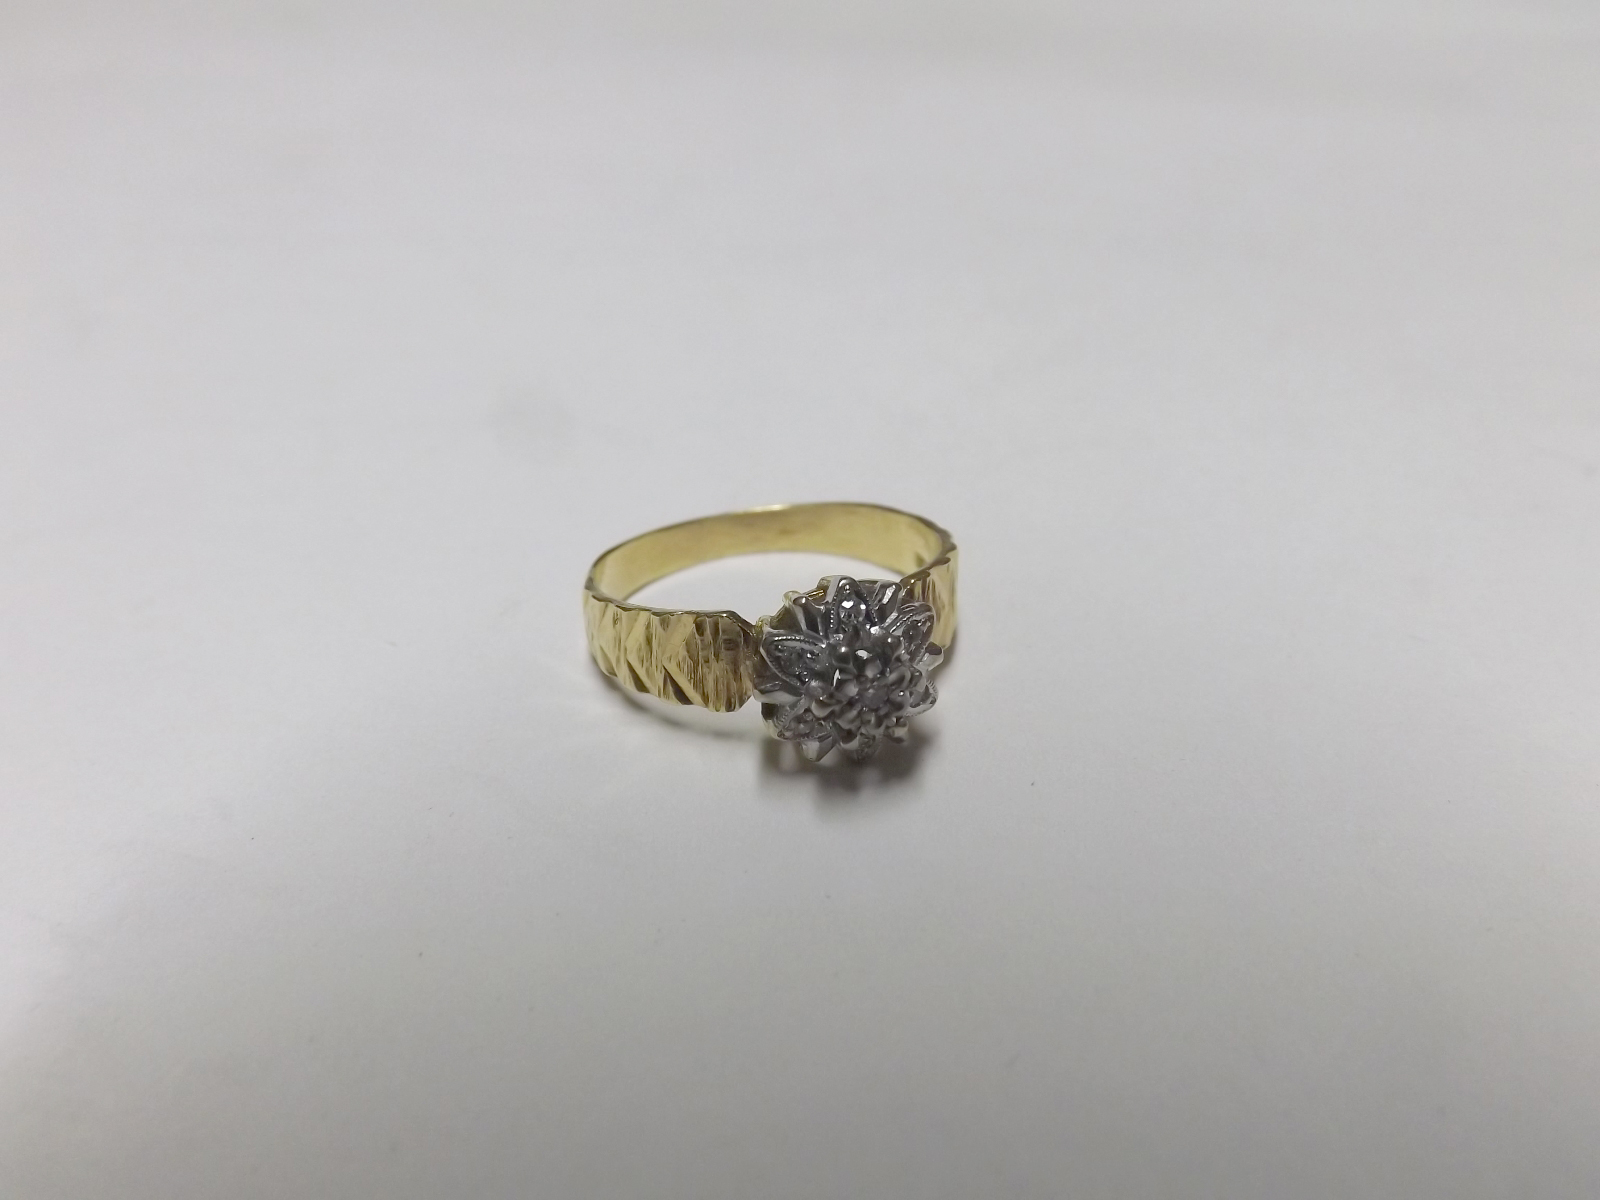 A high grade precious metal all small diamond set cluster Ring of flower head design, having chevron